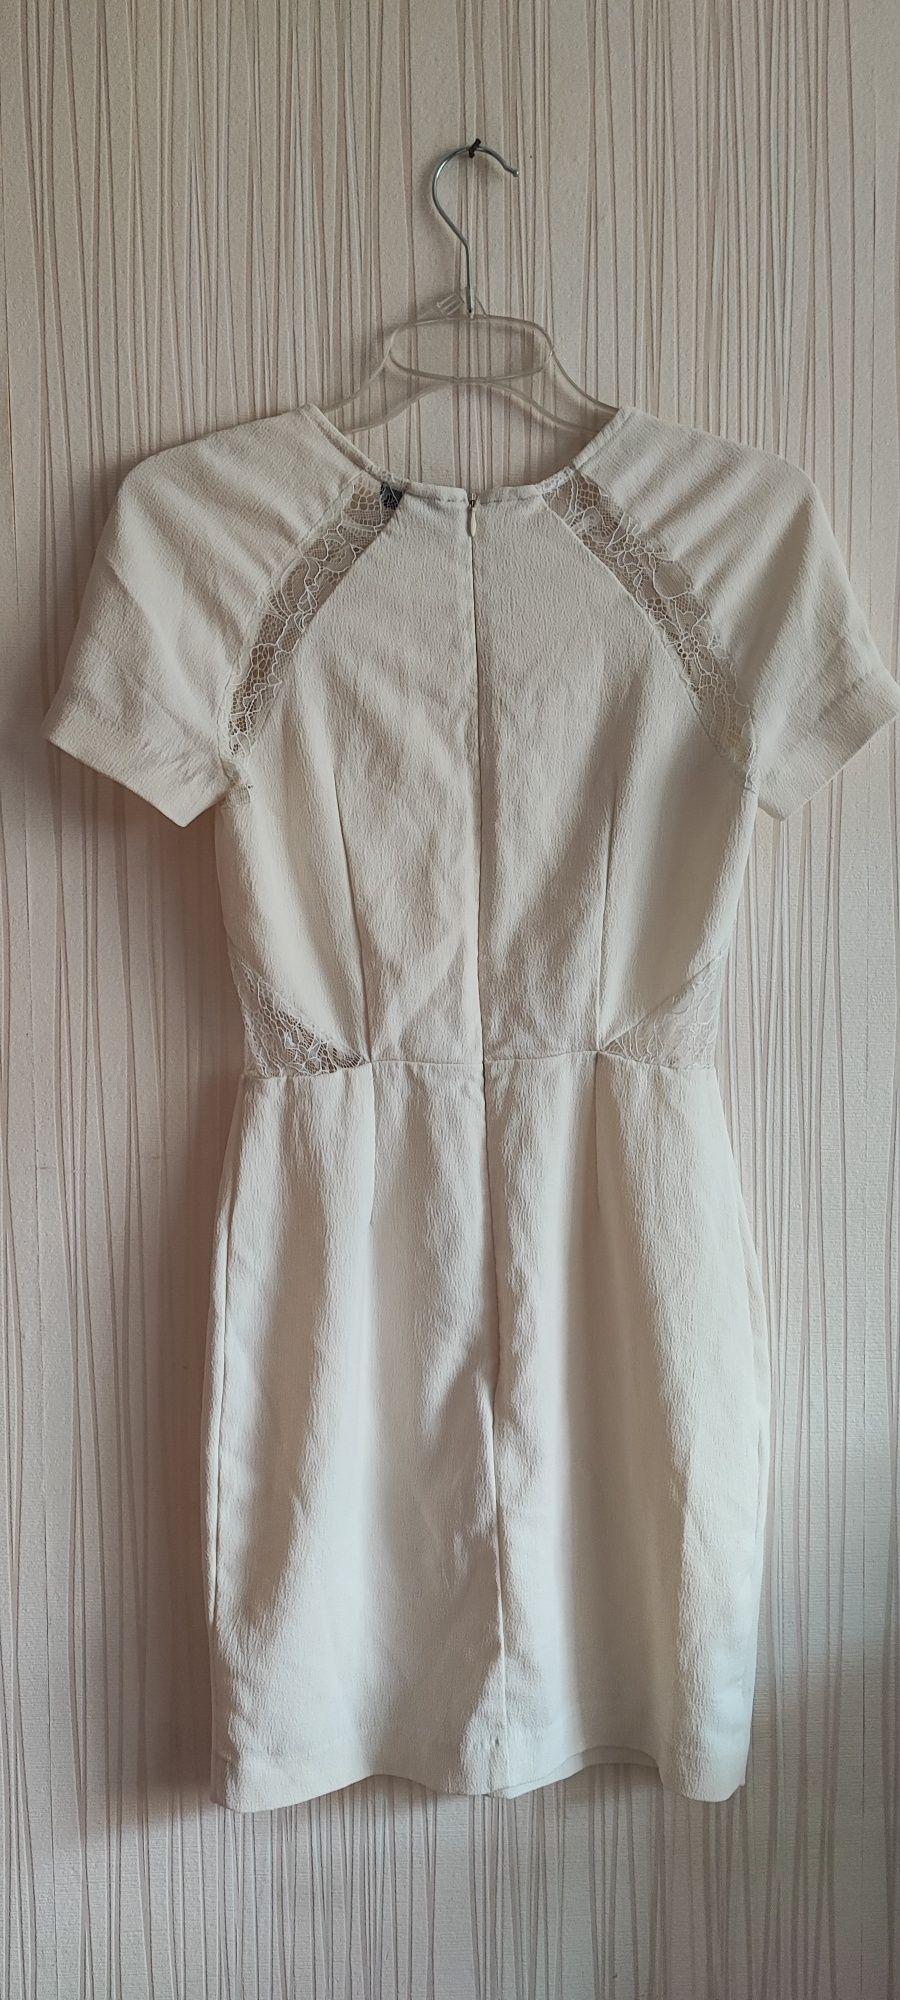 Top shop sukienka biała koronka elegancka seksowna 36 S